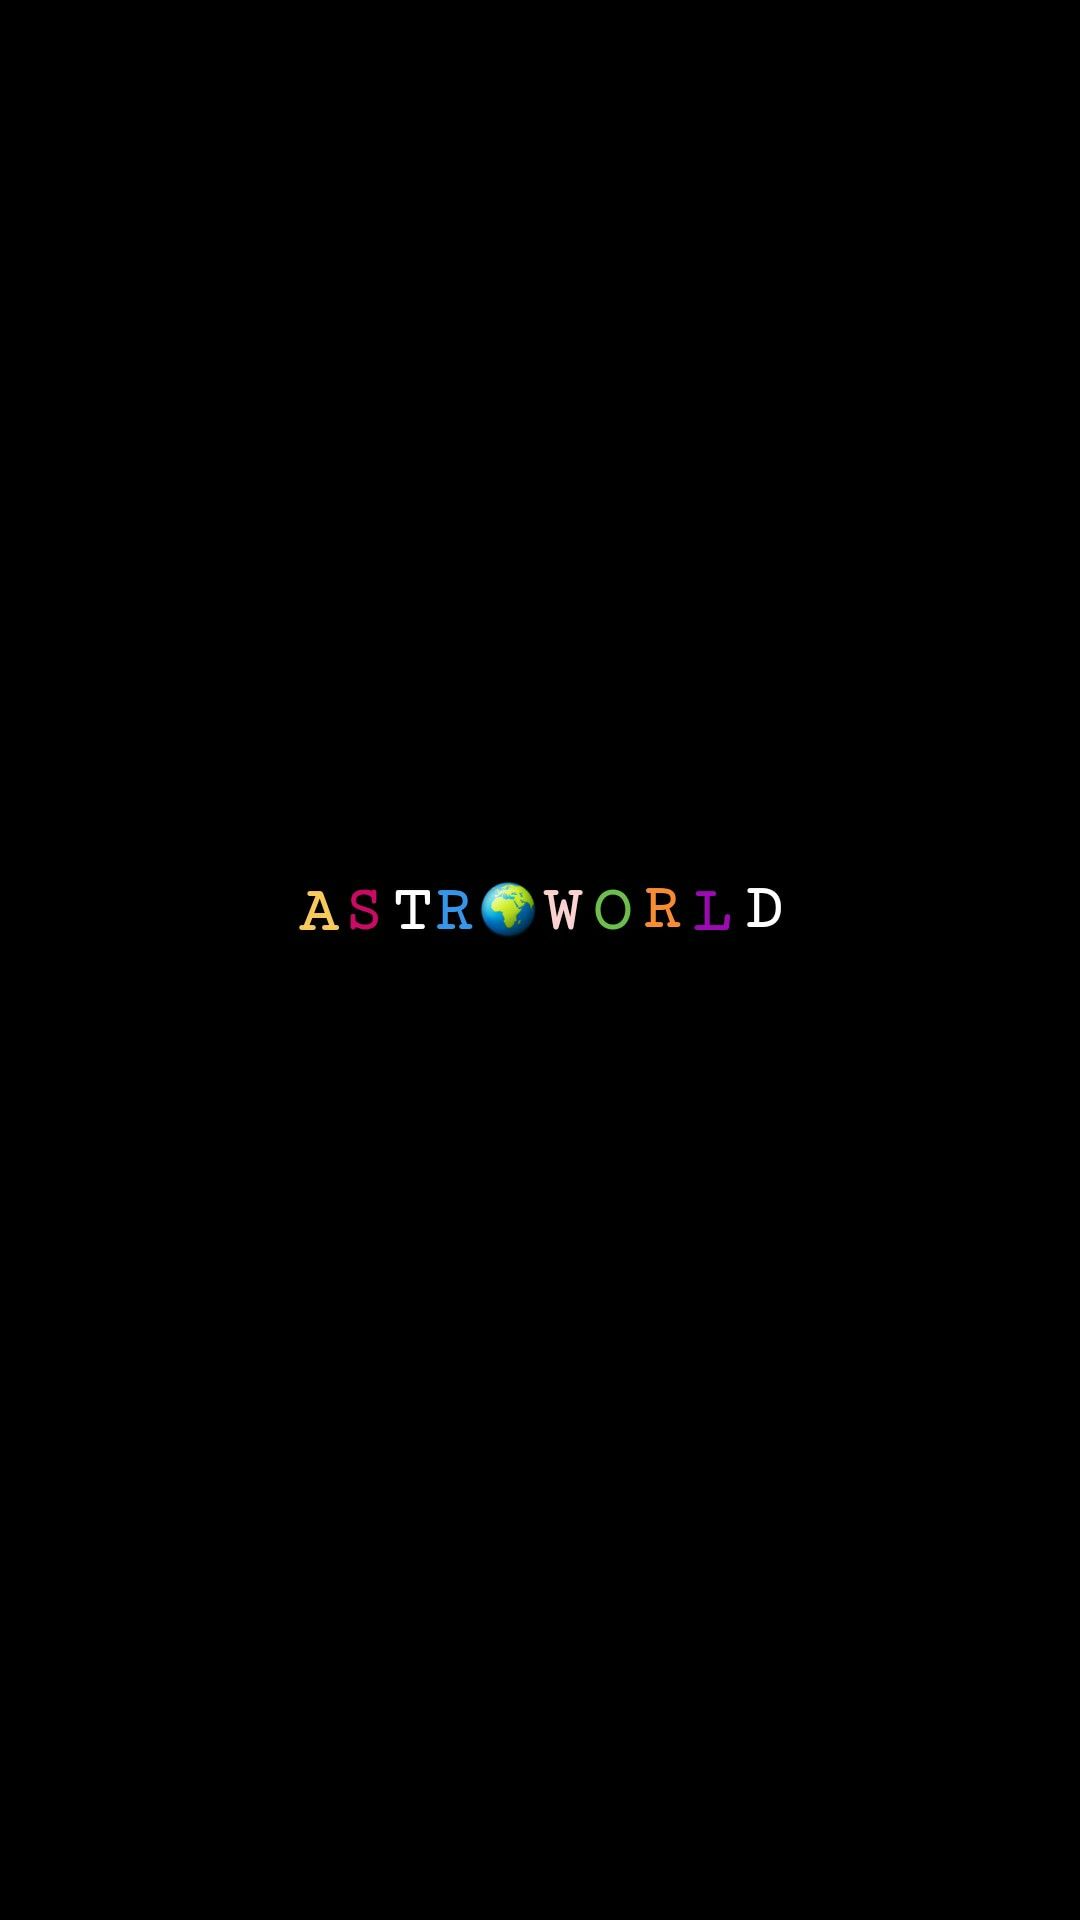 Download Astroworld Rocket Ship Travis Scott Aesthetic Wallpaper